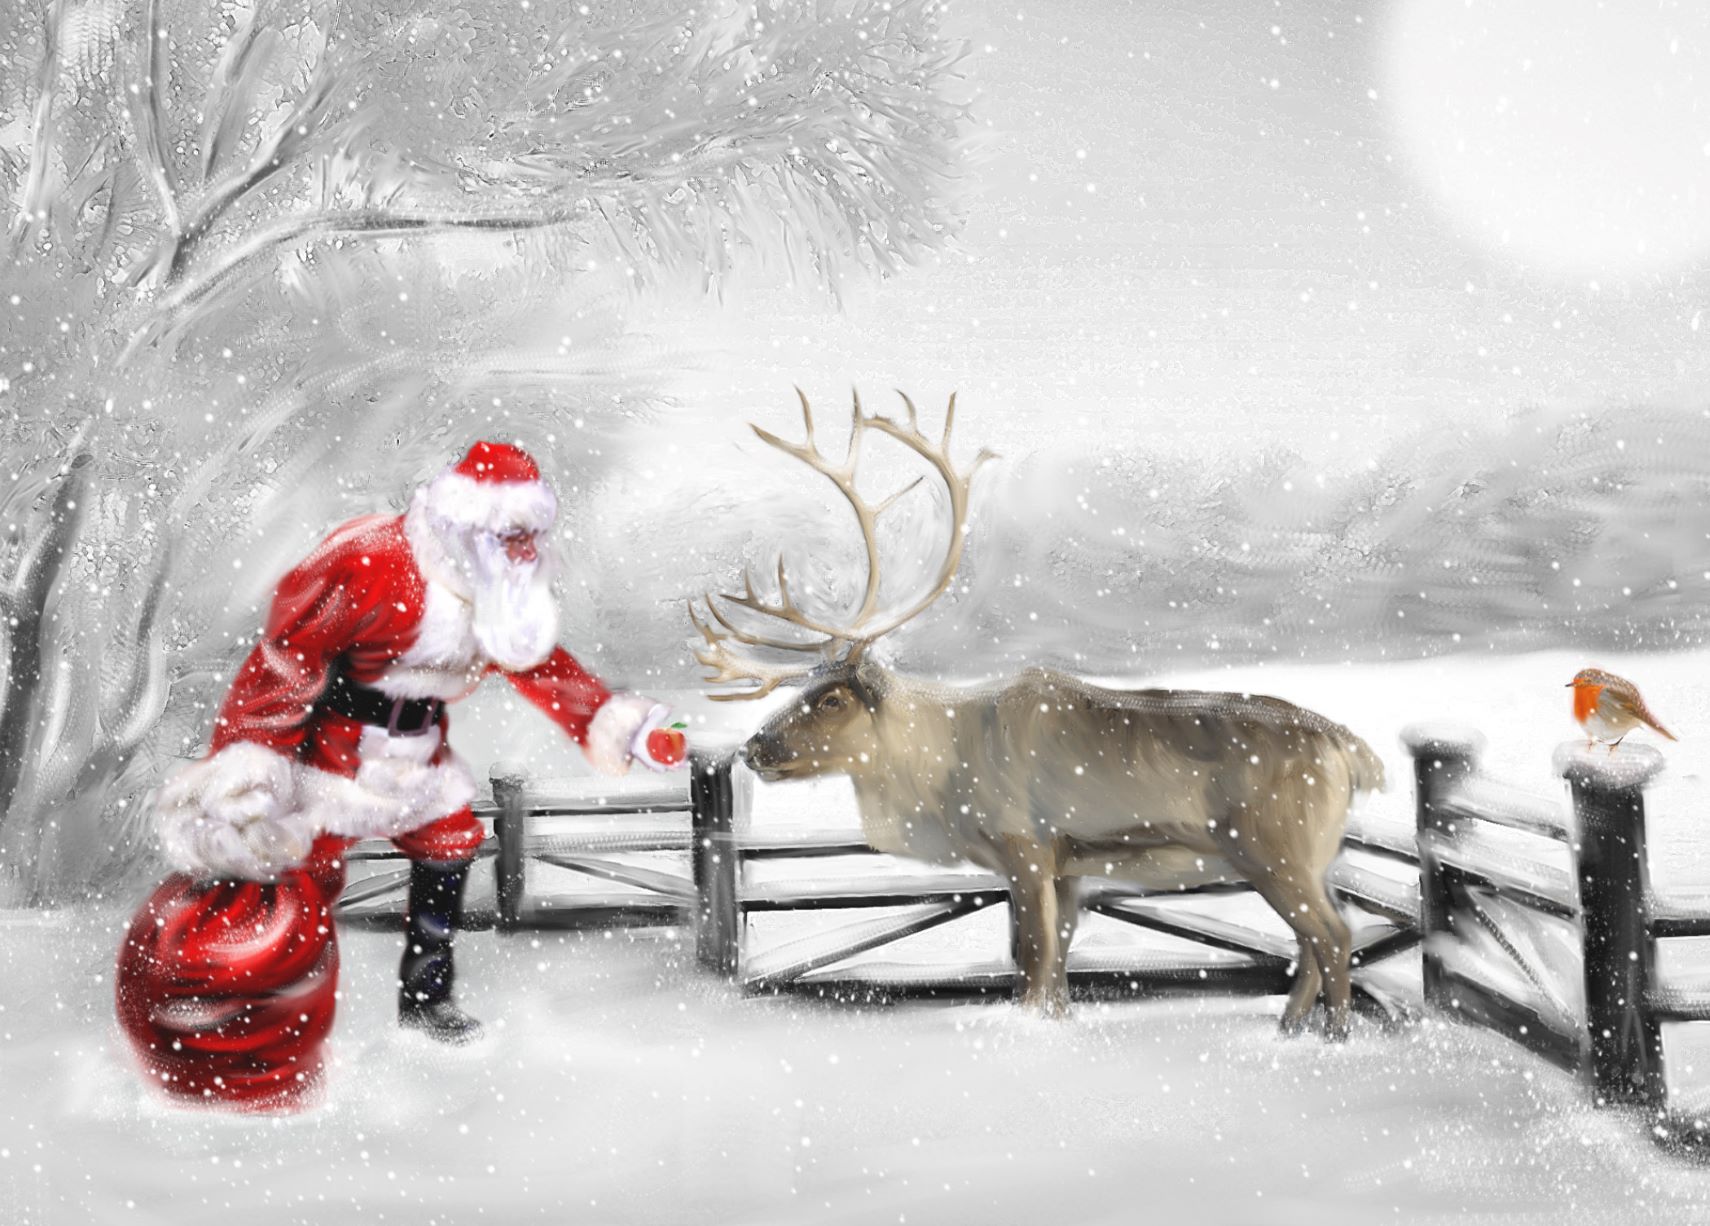 Santa feeding reindeer a treat